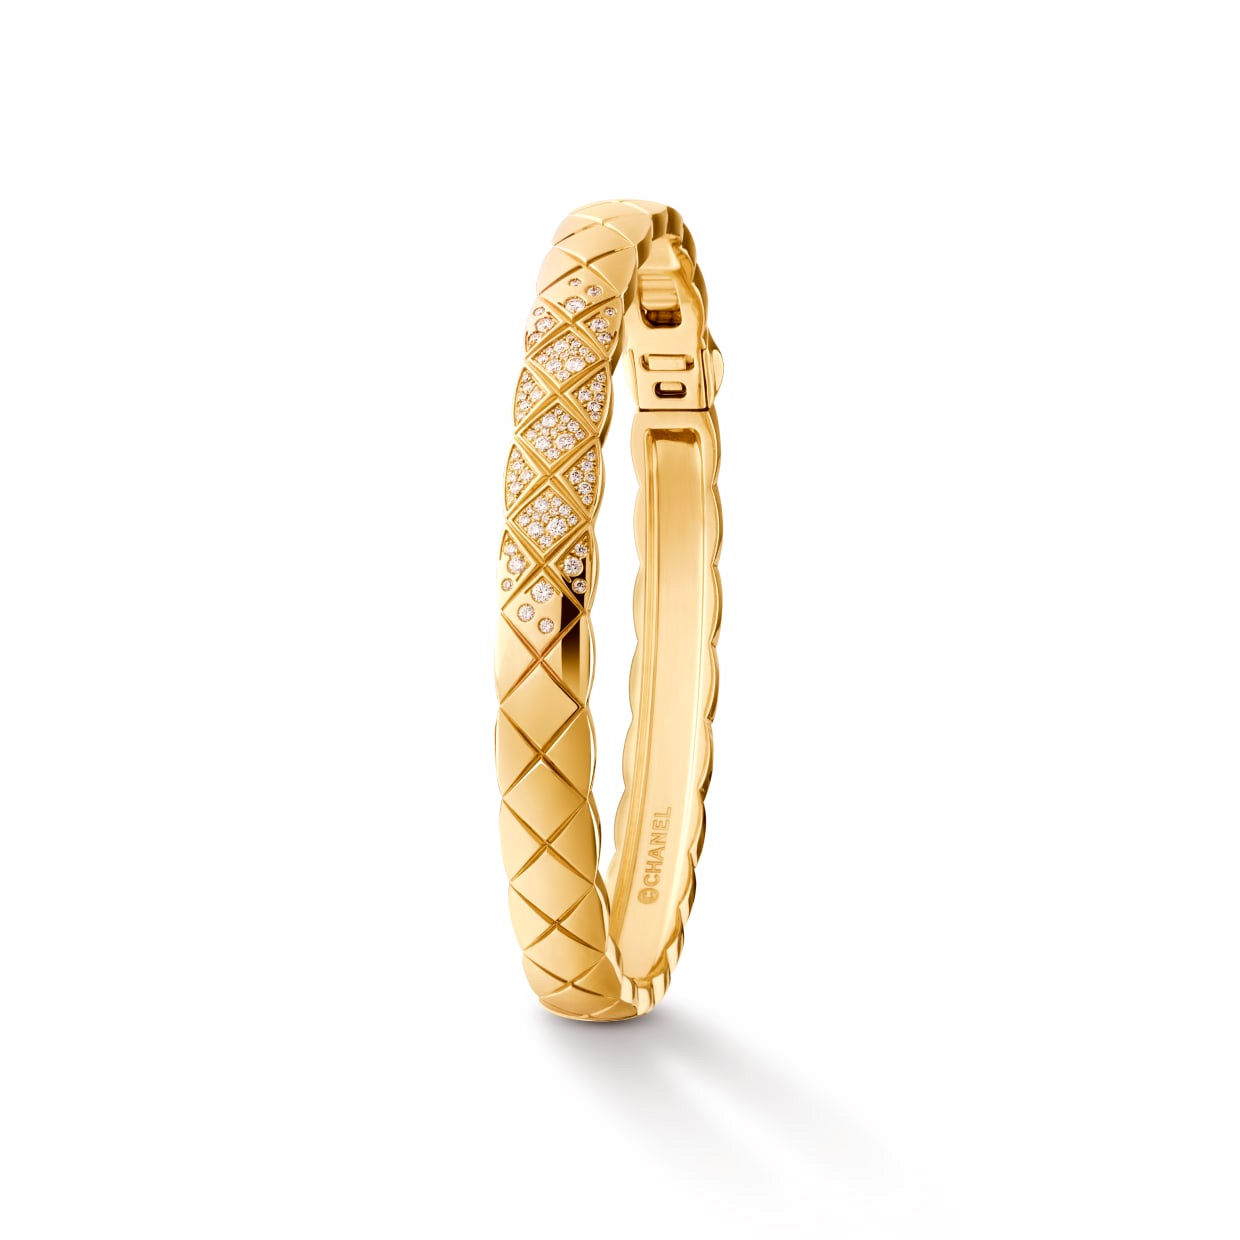 Custom Design 925 Sterling Silver bracelet bangle in 18K yellow gold OEM/ODM Jewelry